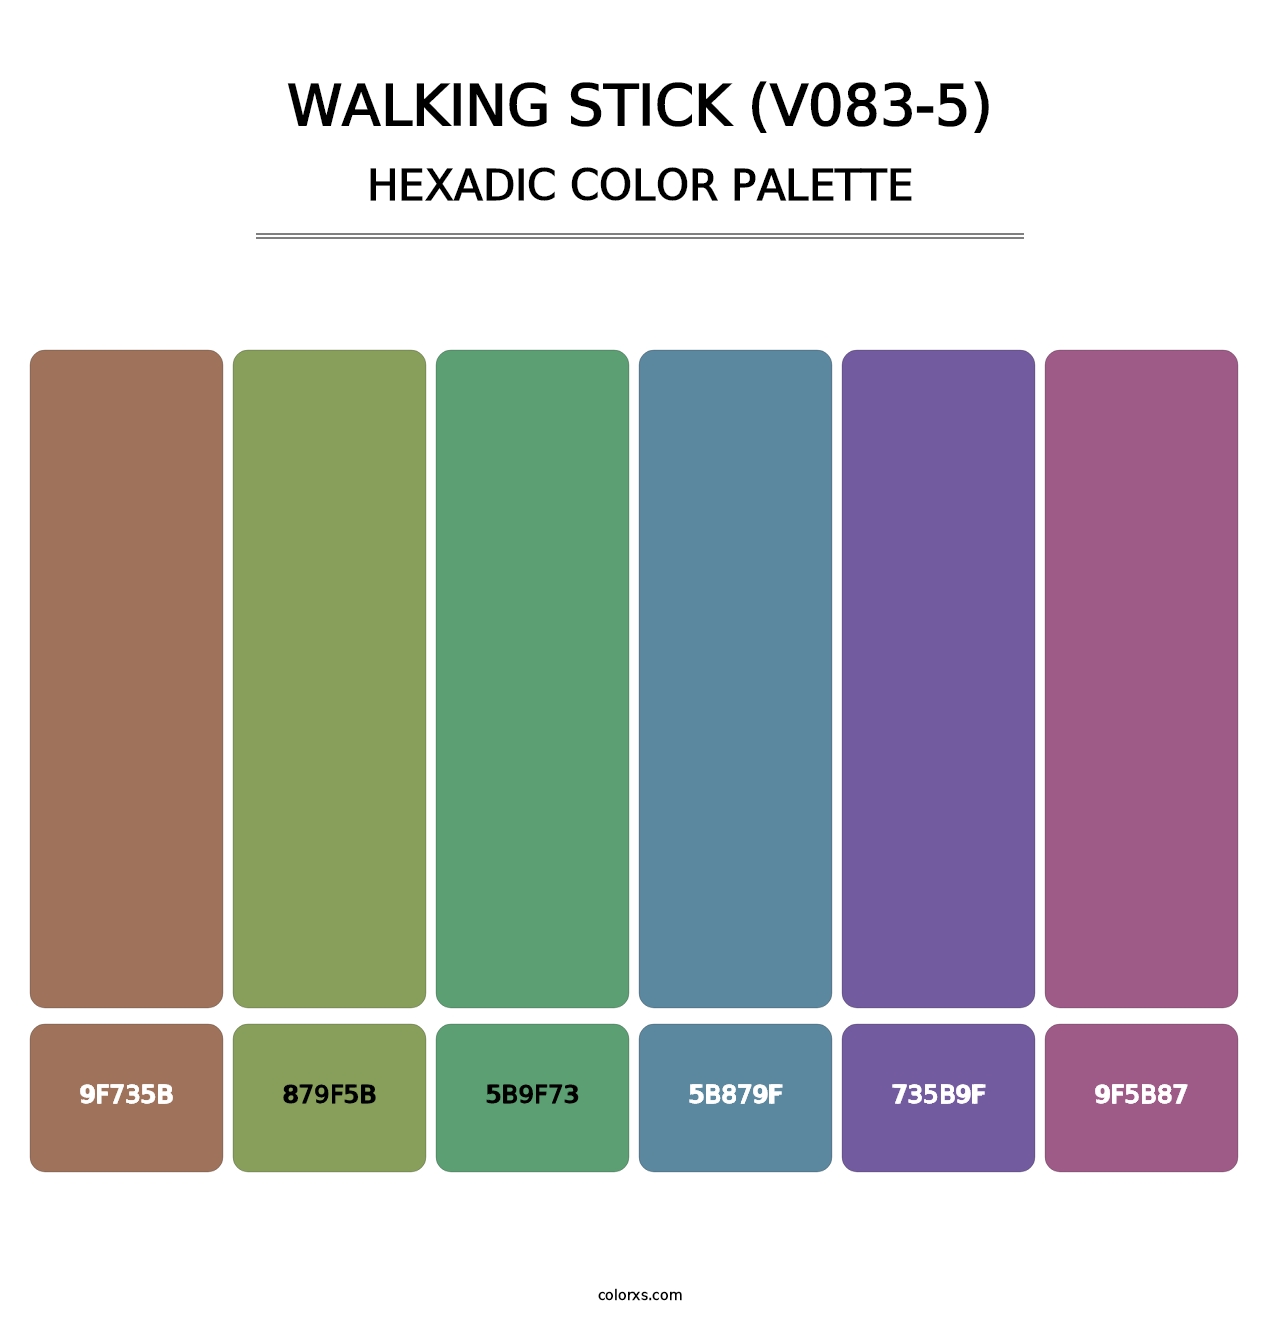 Walking Stick (V083-5) - Hexadic Color Palette